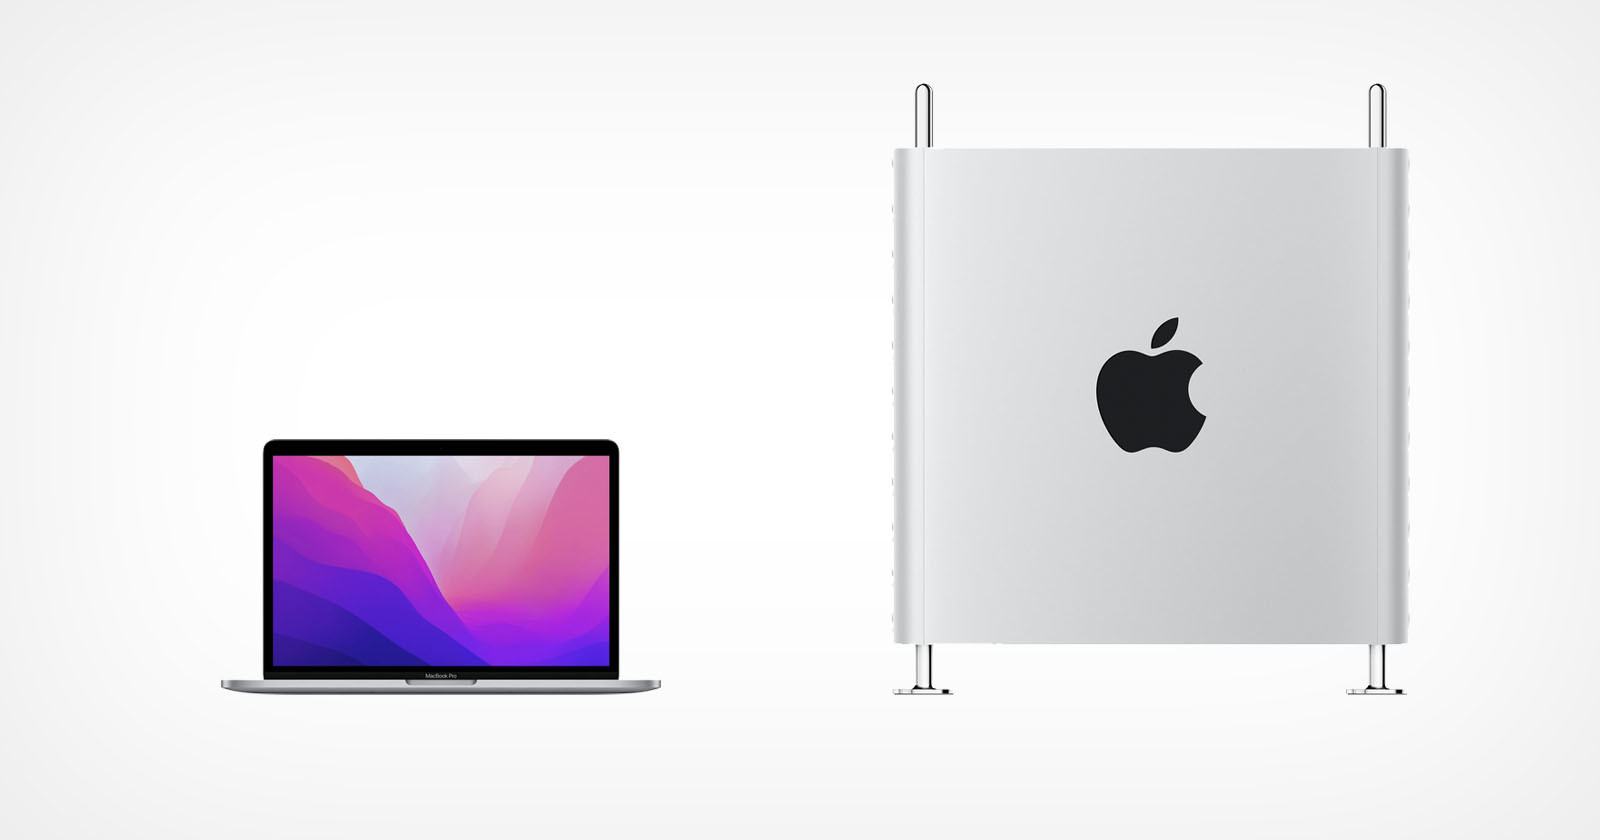  macbook pro more powerful than base mac 